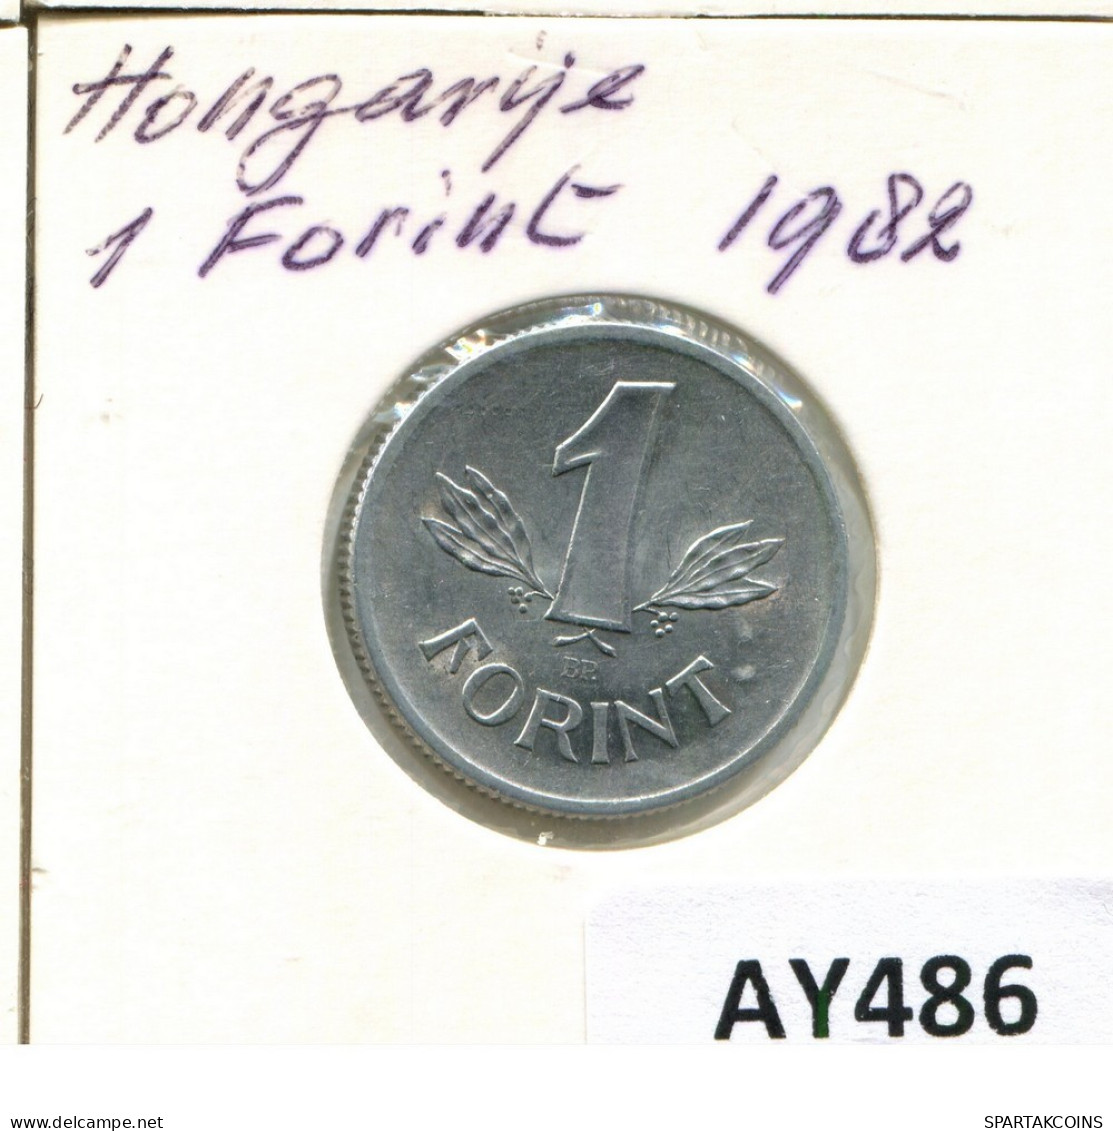 1 FORINT 1982 HUNGARY Coin #AY486.U.A - Hungary